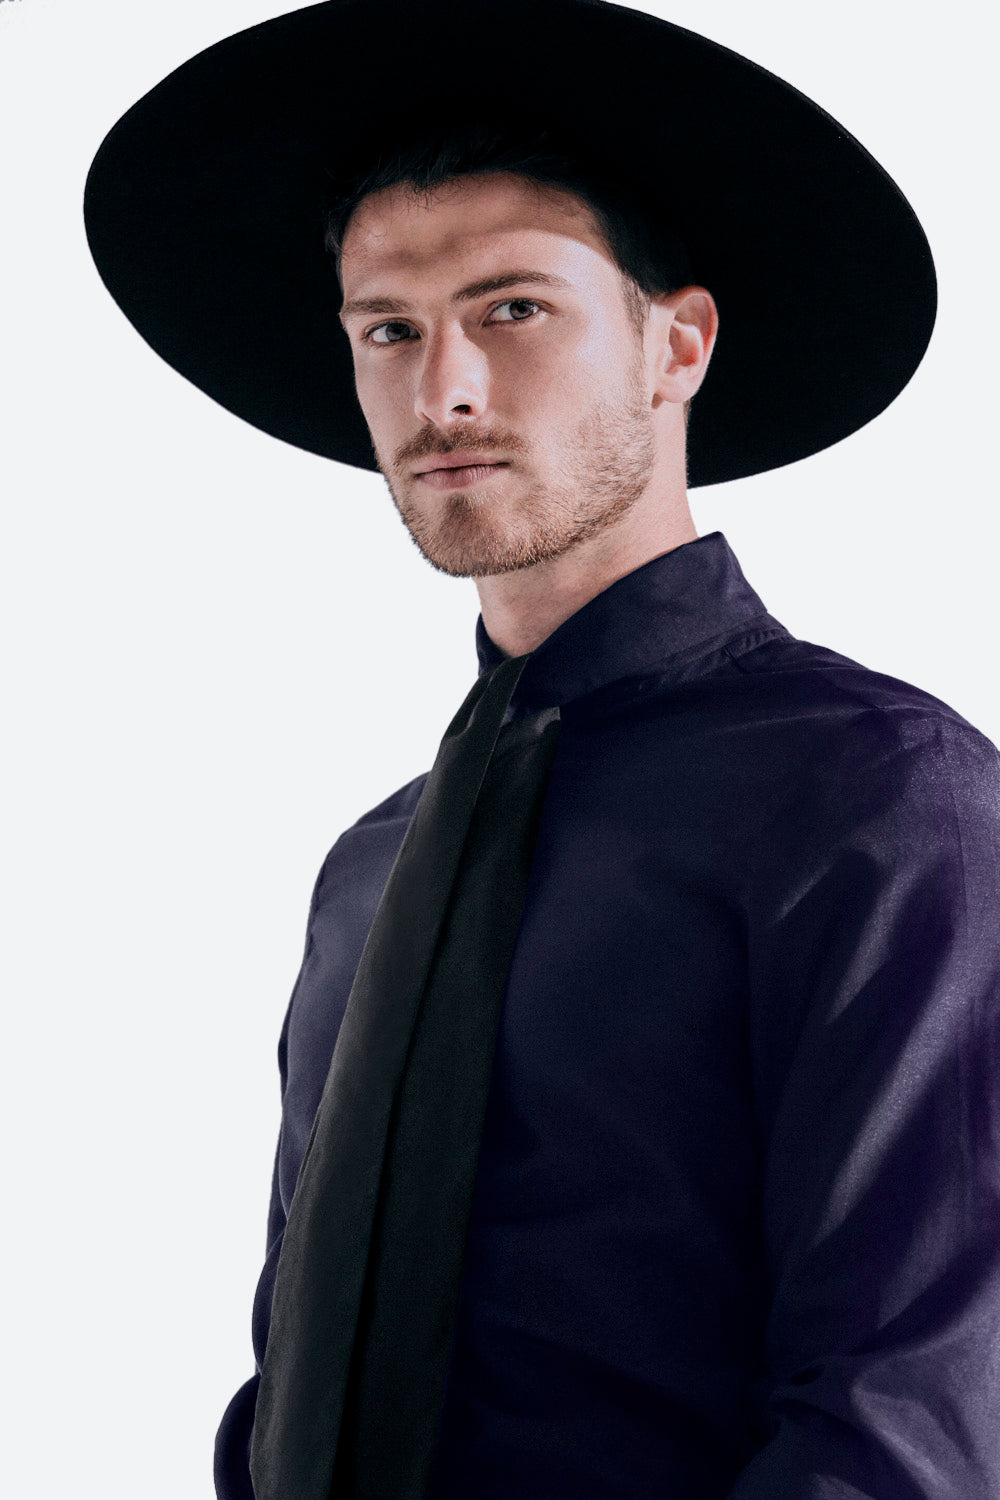 Fedora Wide Brim Hat | 100% Wool | Leather Trim | unisex | Black M